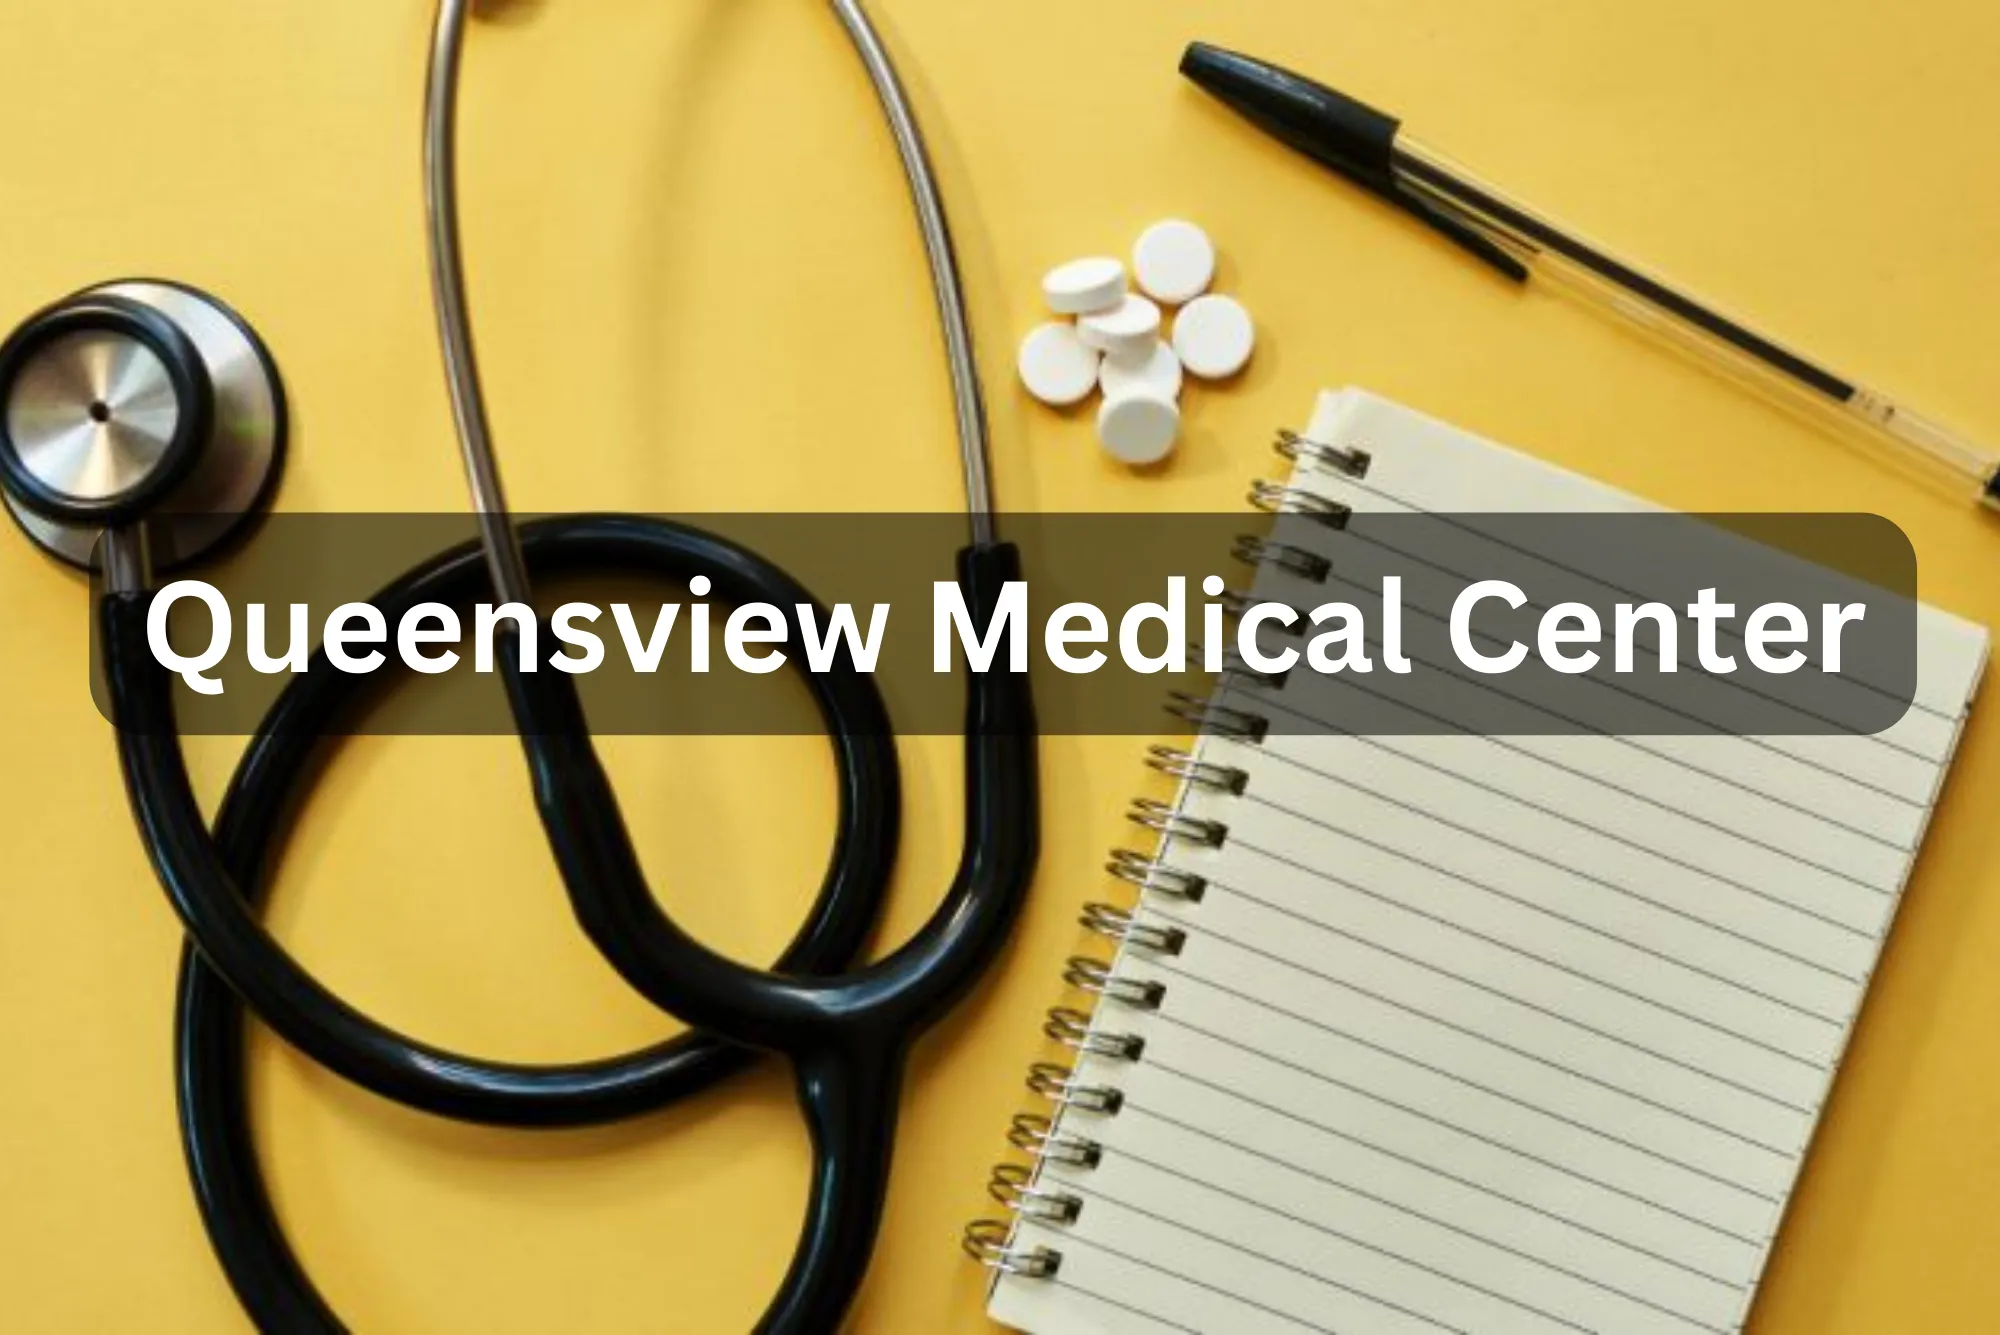 Queensview Medical Center